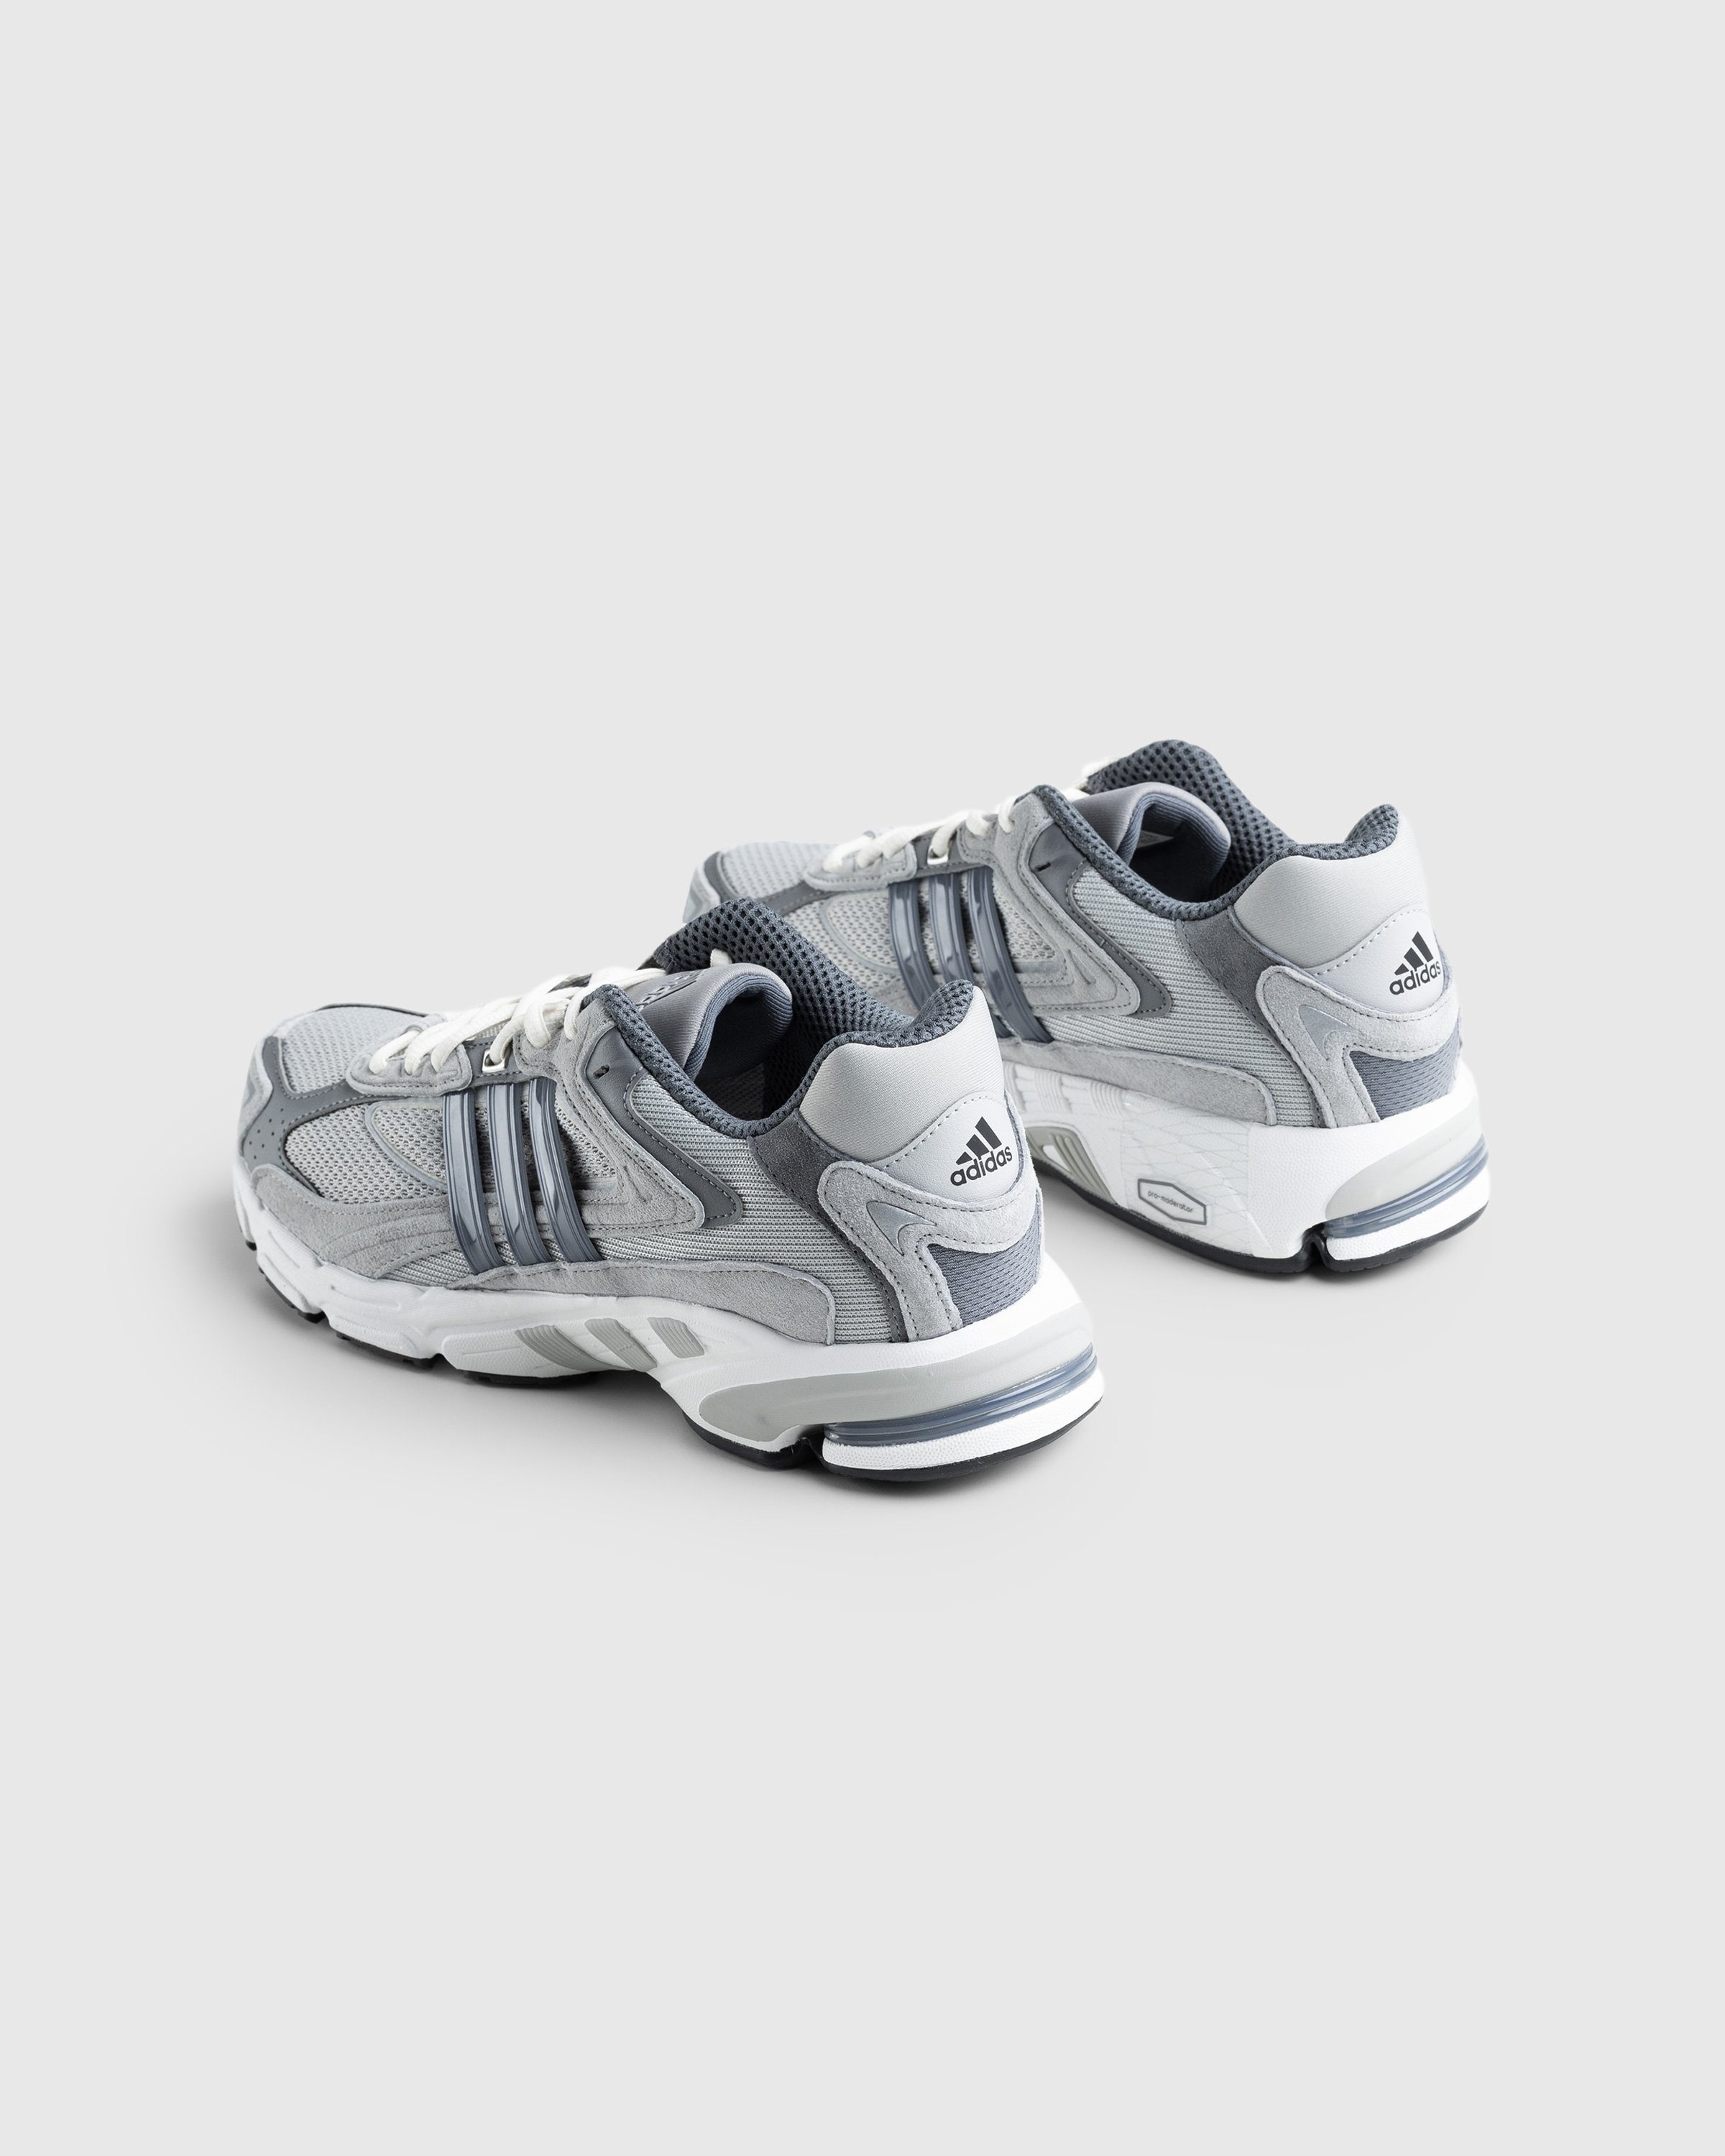 Adidas – Response CL Grey | Highsnobiety Shop